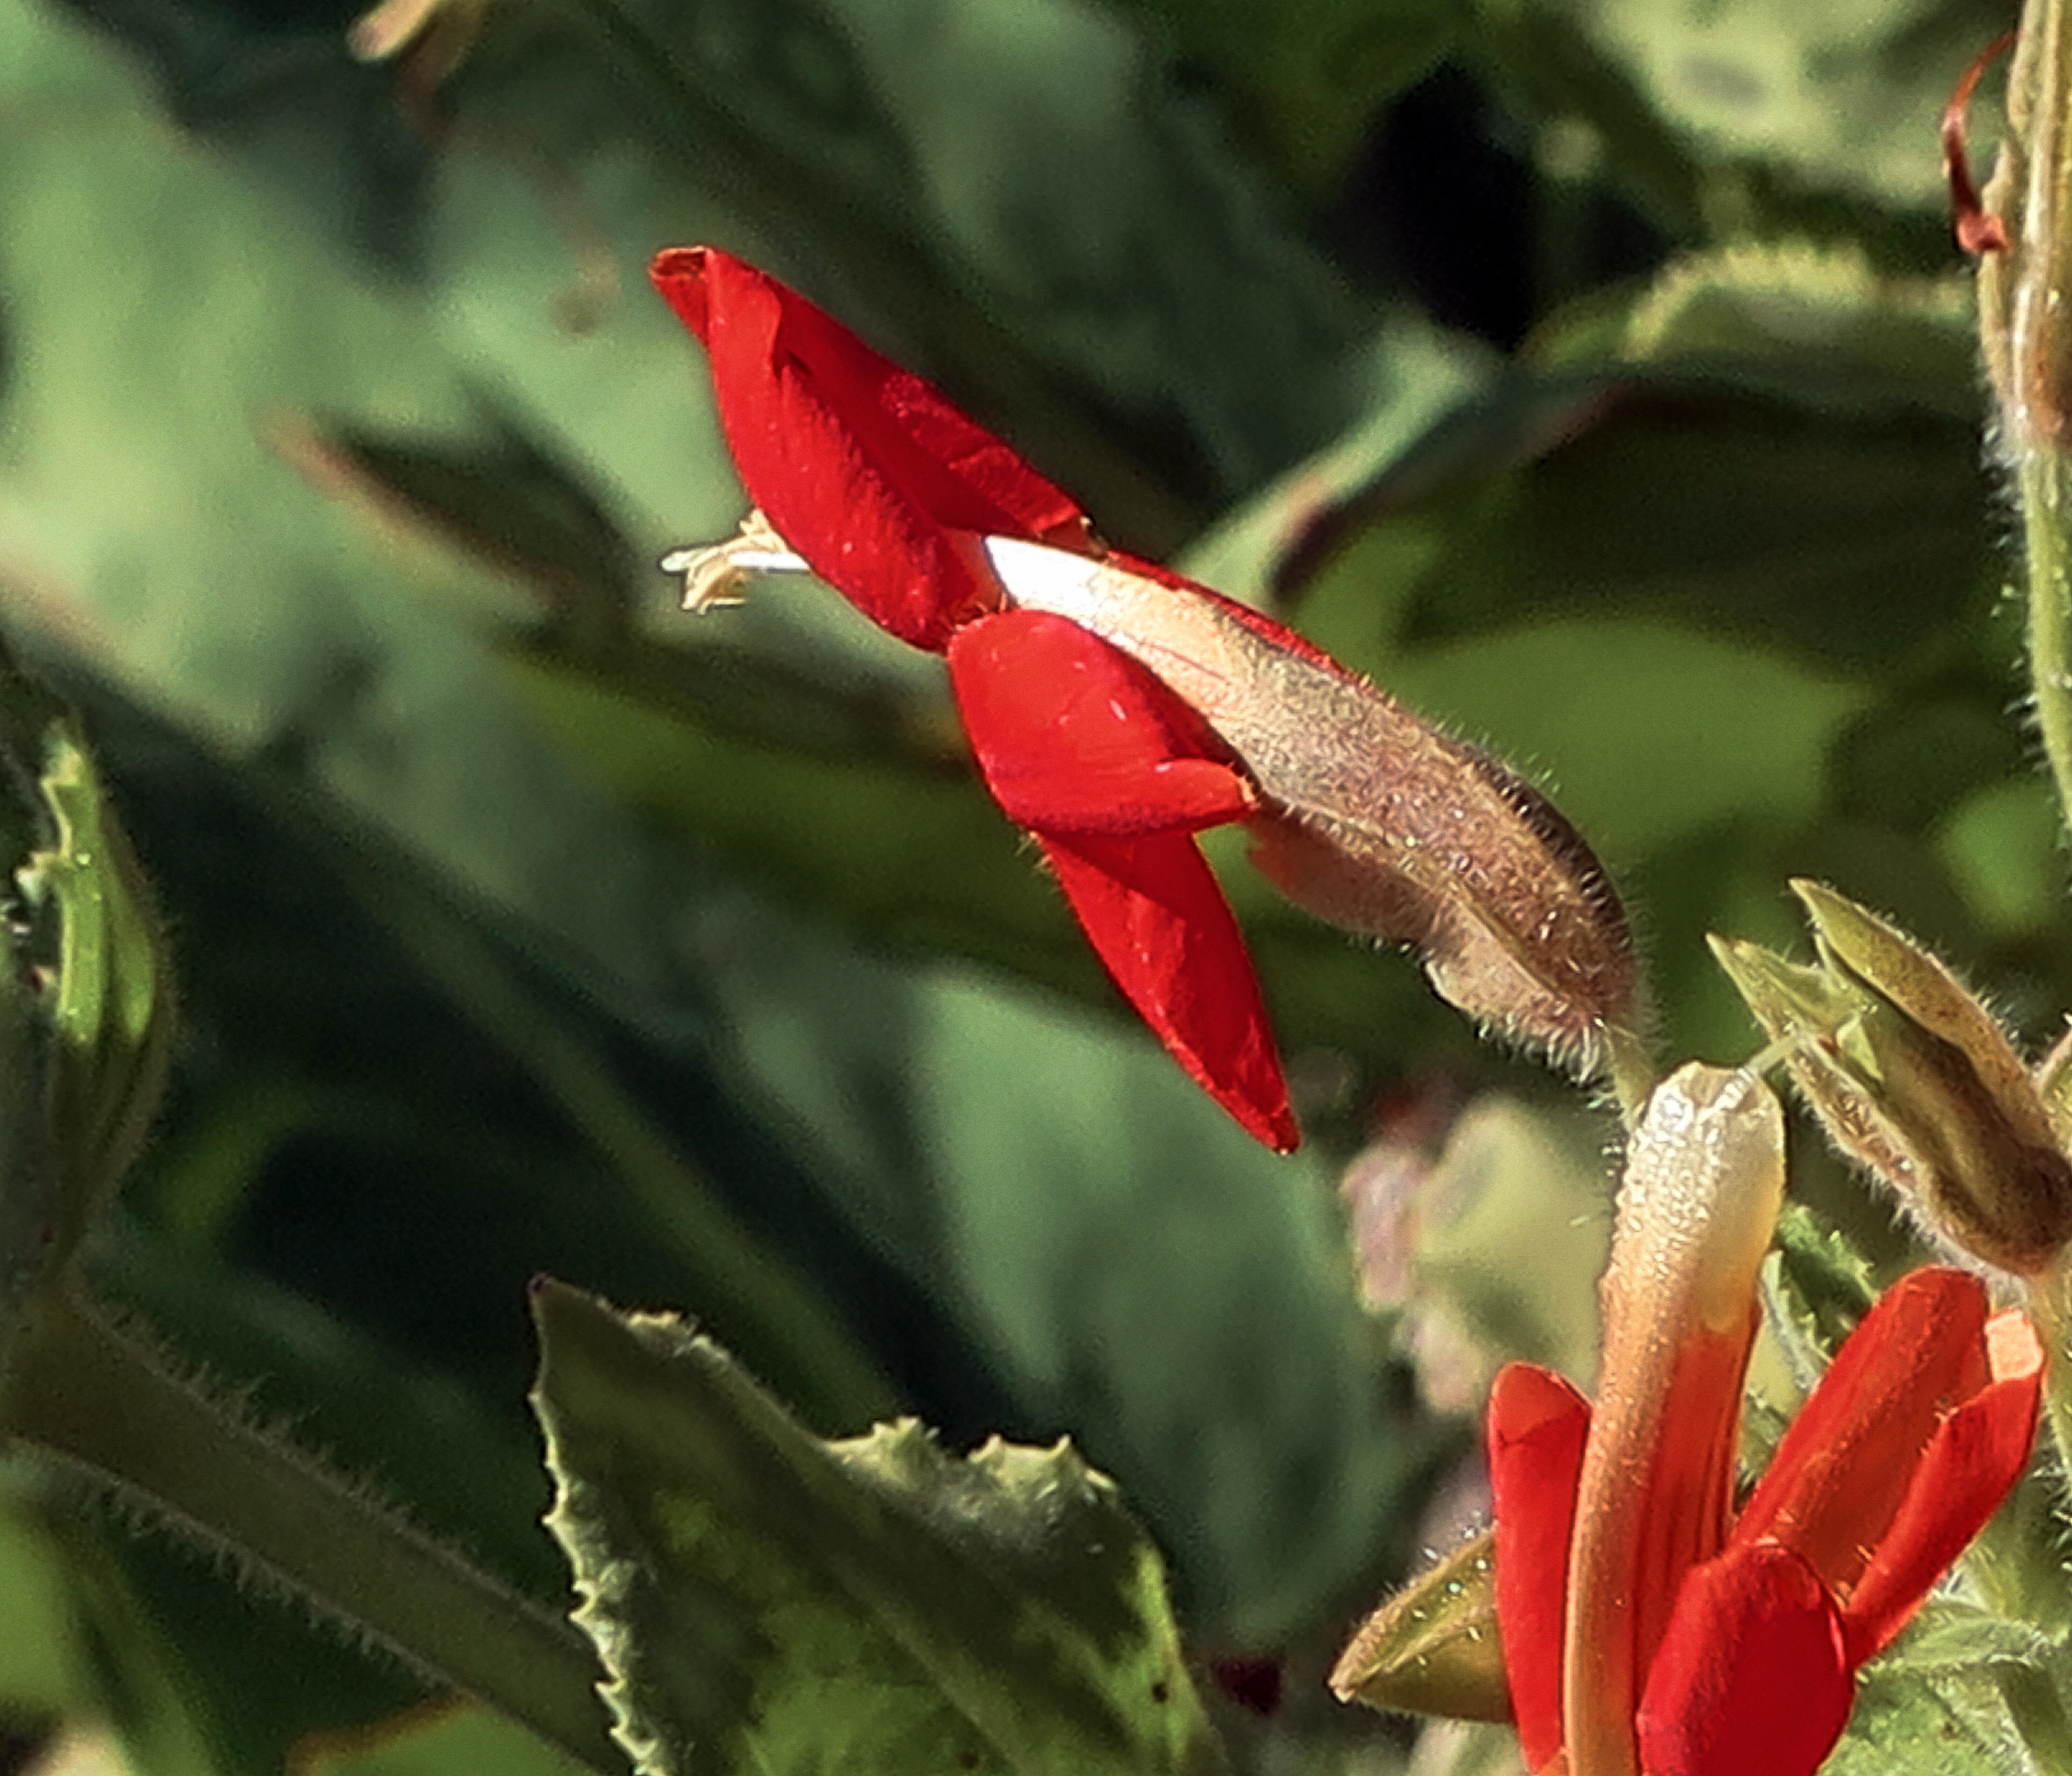 Image of scarlet monkeyflower